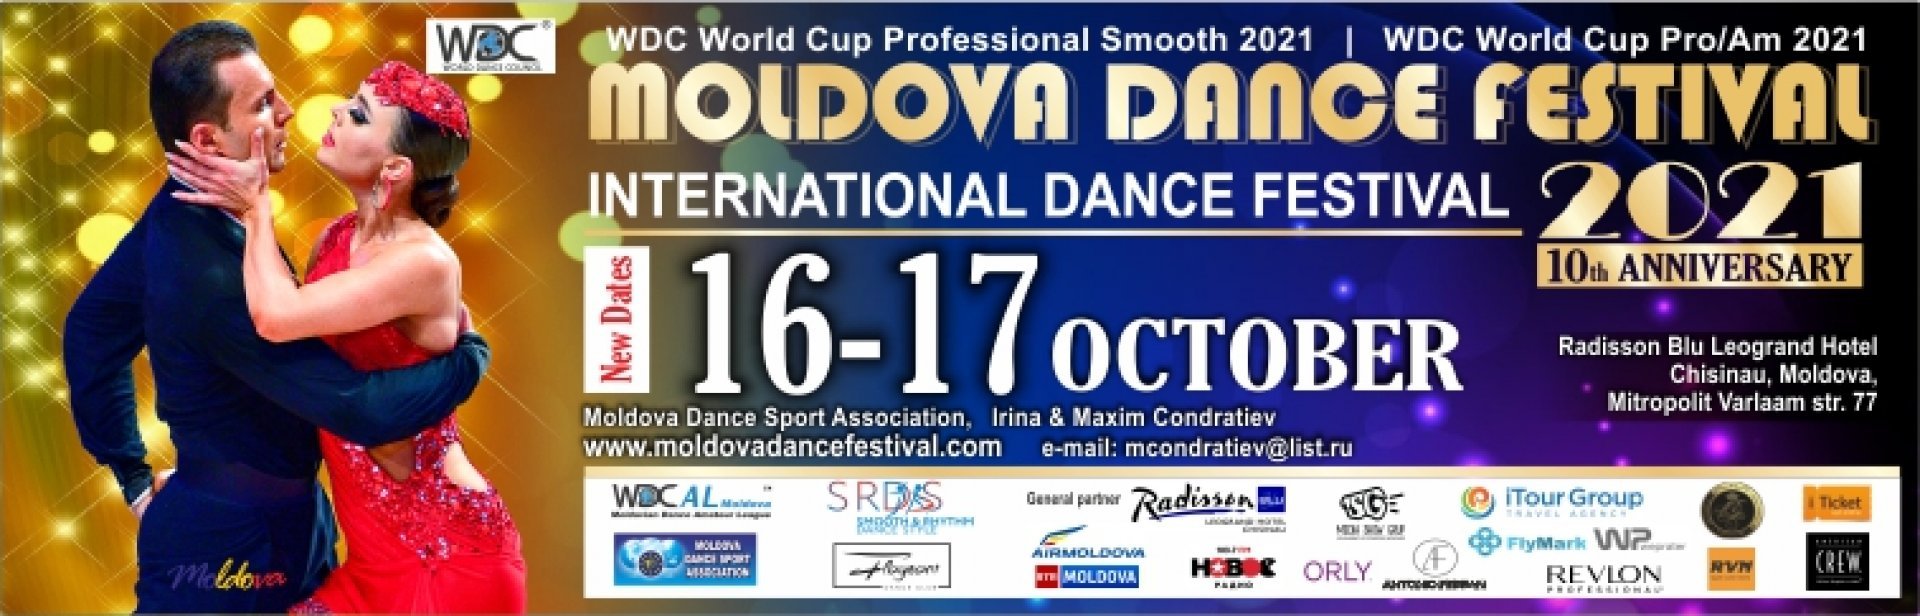 17 Octombrie 16:30-18:30 - Moldova Dance Festival 2021